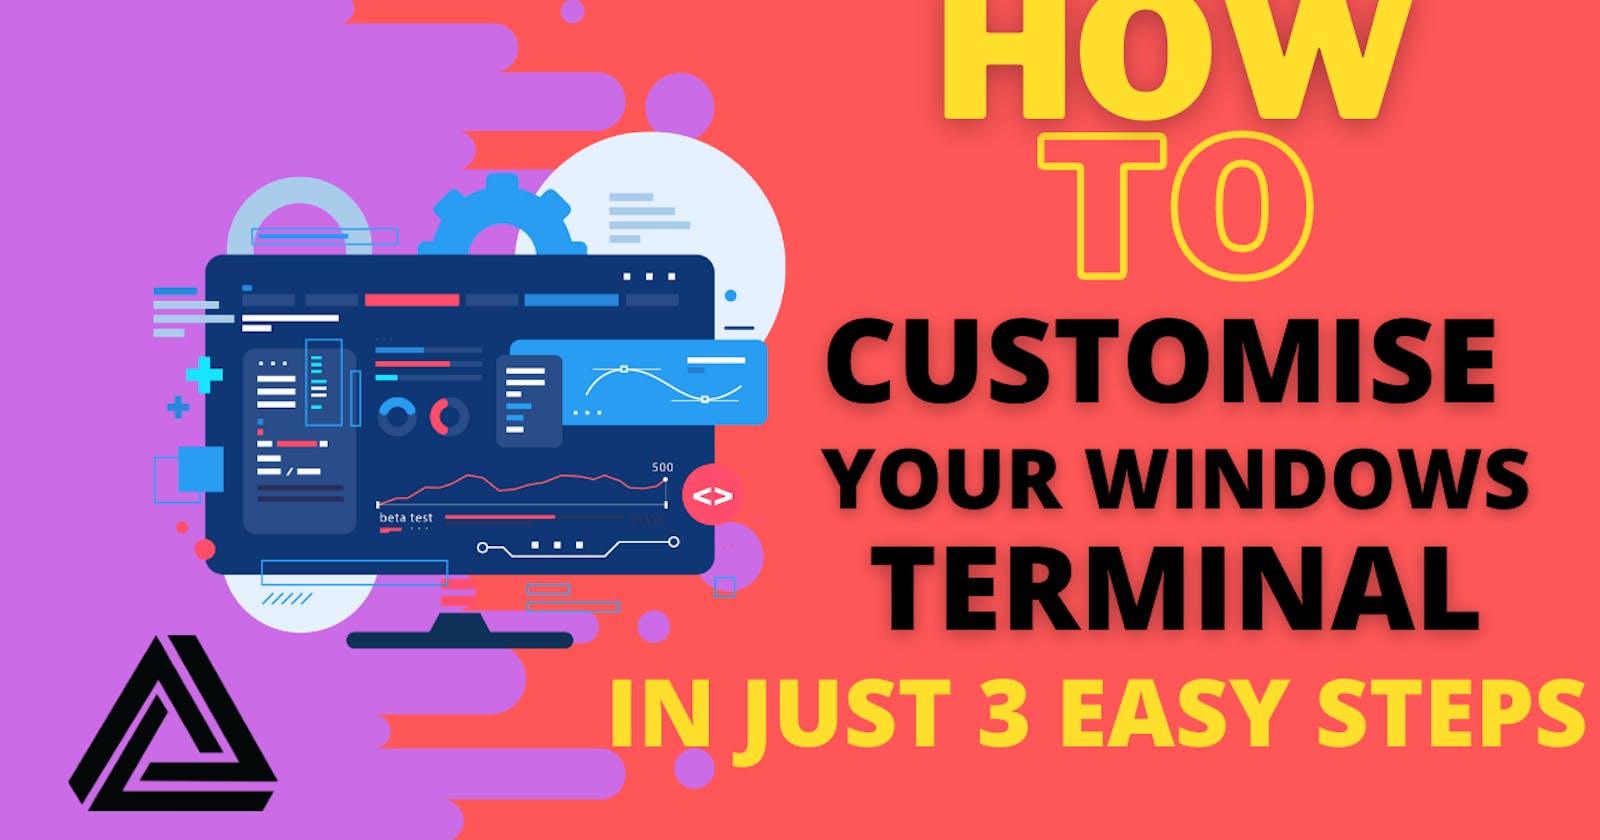 How to customize the windows terminal? Modify Powershell | Terminal| CMD | POSH GIT | OH MY POSH